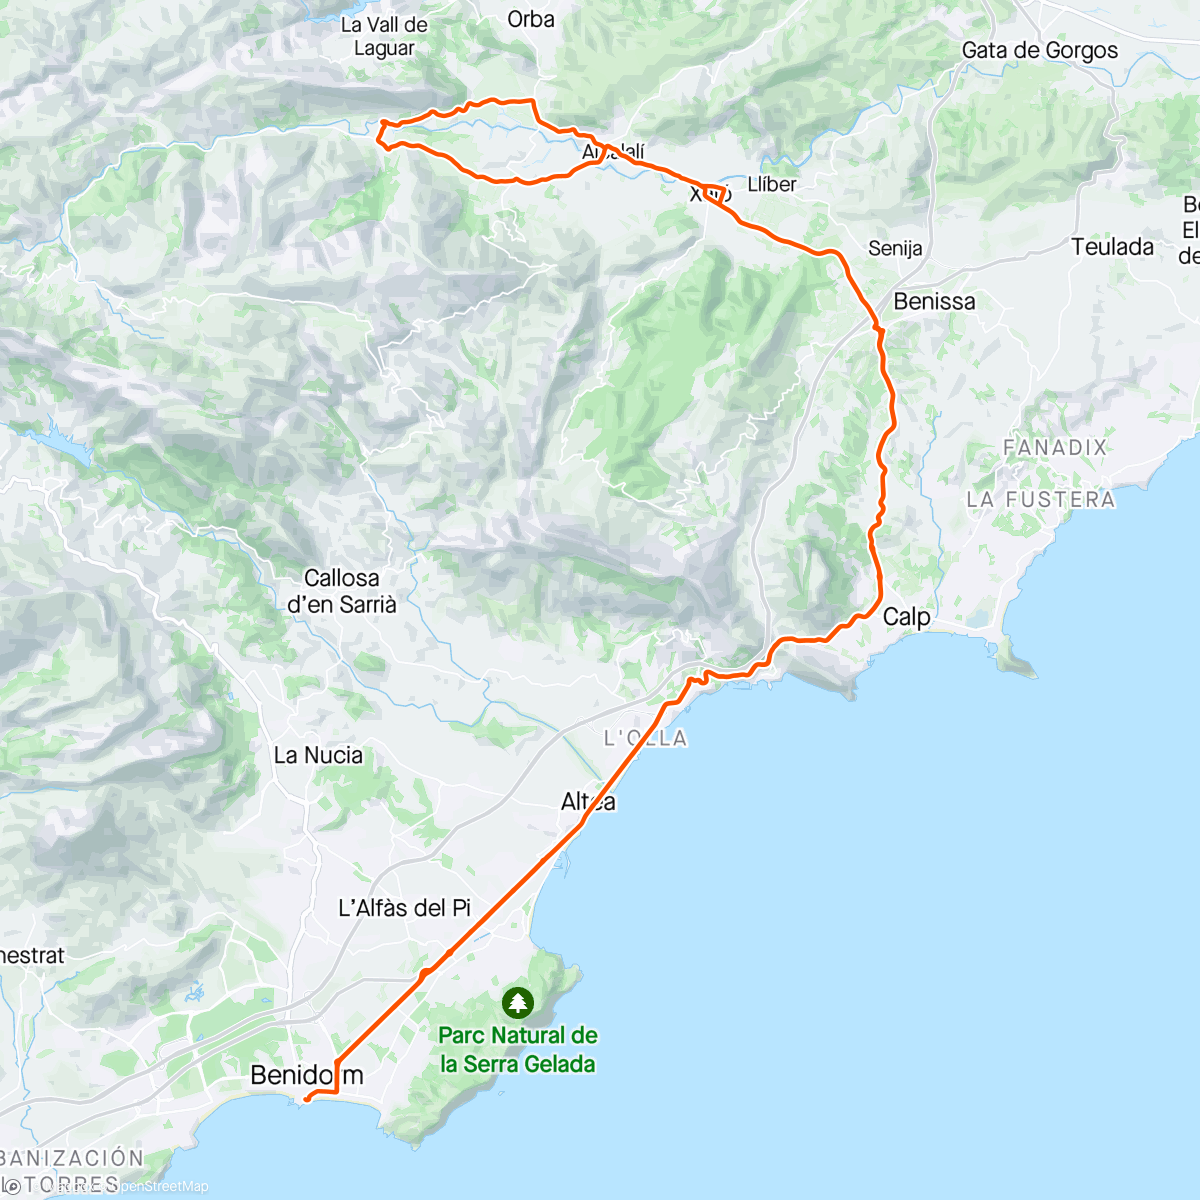 Mapa da atividade, Benidorm-Benisa-Alcalali-Murla-Xalon-Benidorm